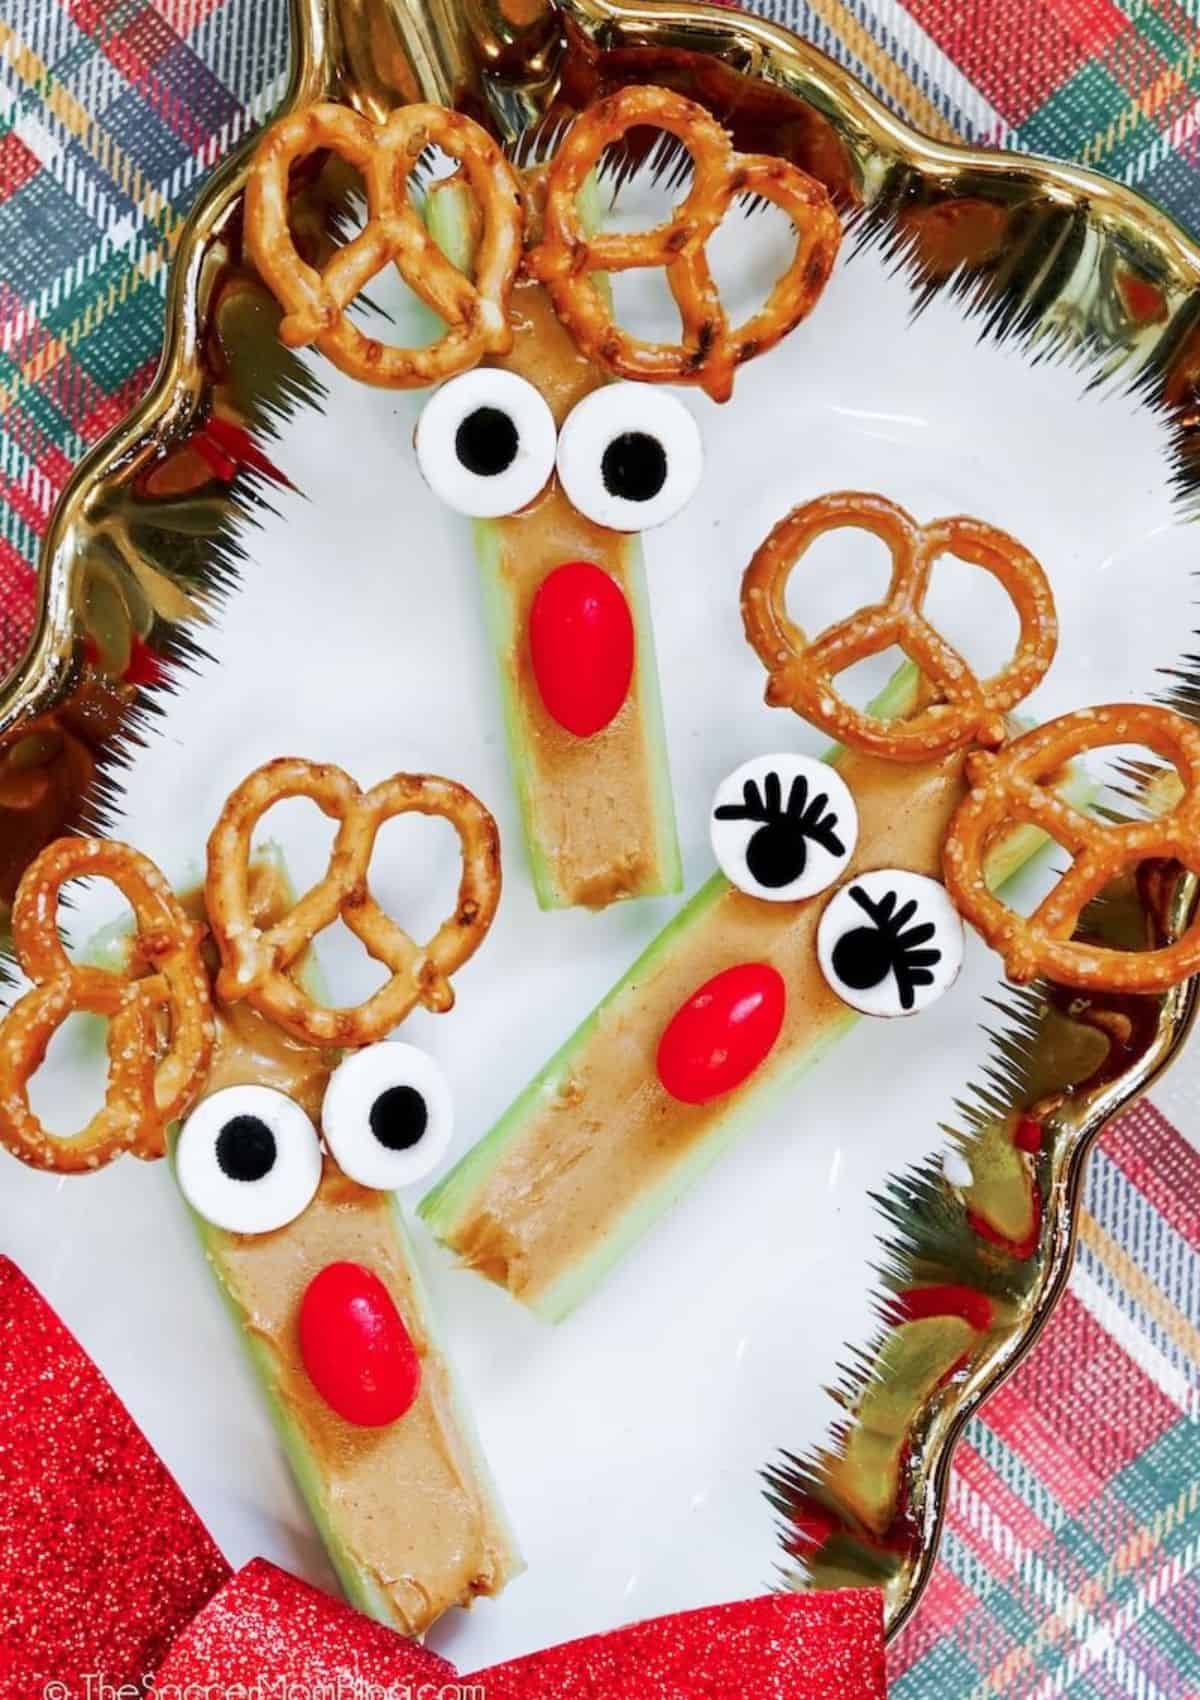 Celery sticks with peanut butter insides reindeer faces from pretzels.